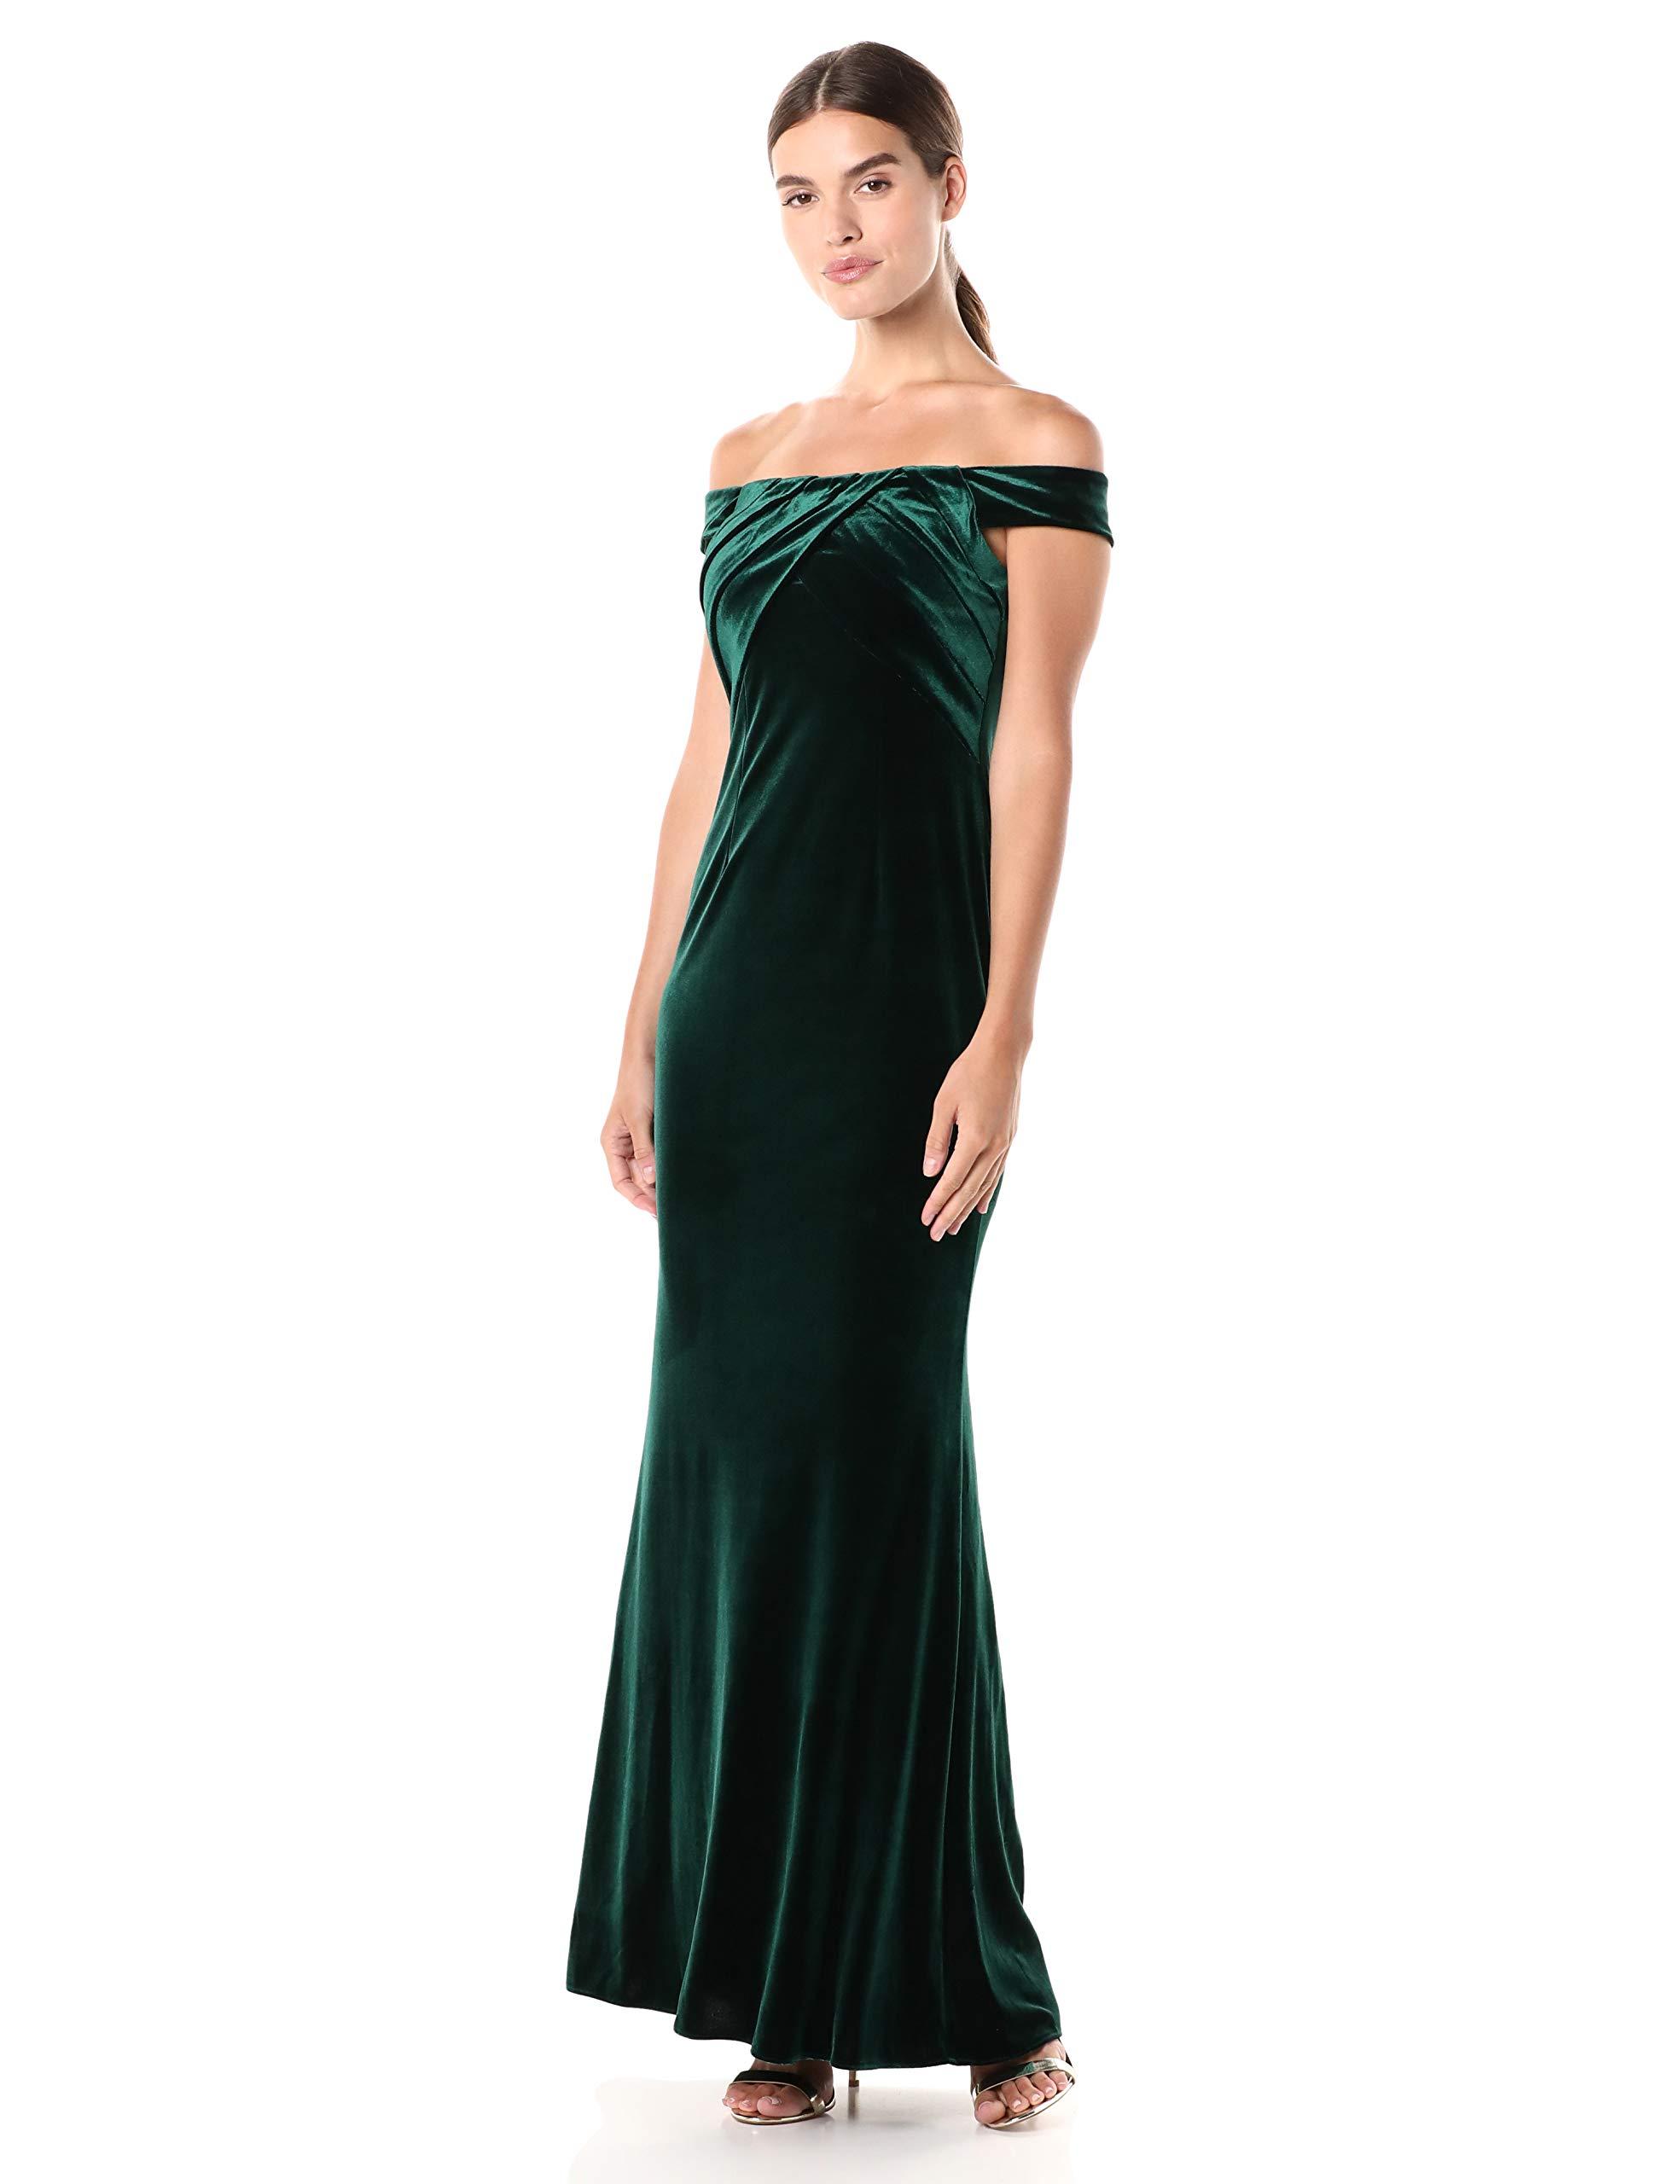 Adrianna Papell Stretch Velvet Dress in Emerald (Green) - Lyst